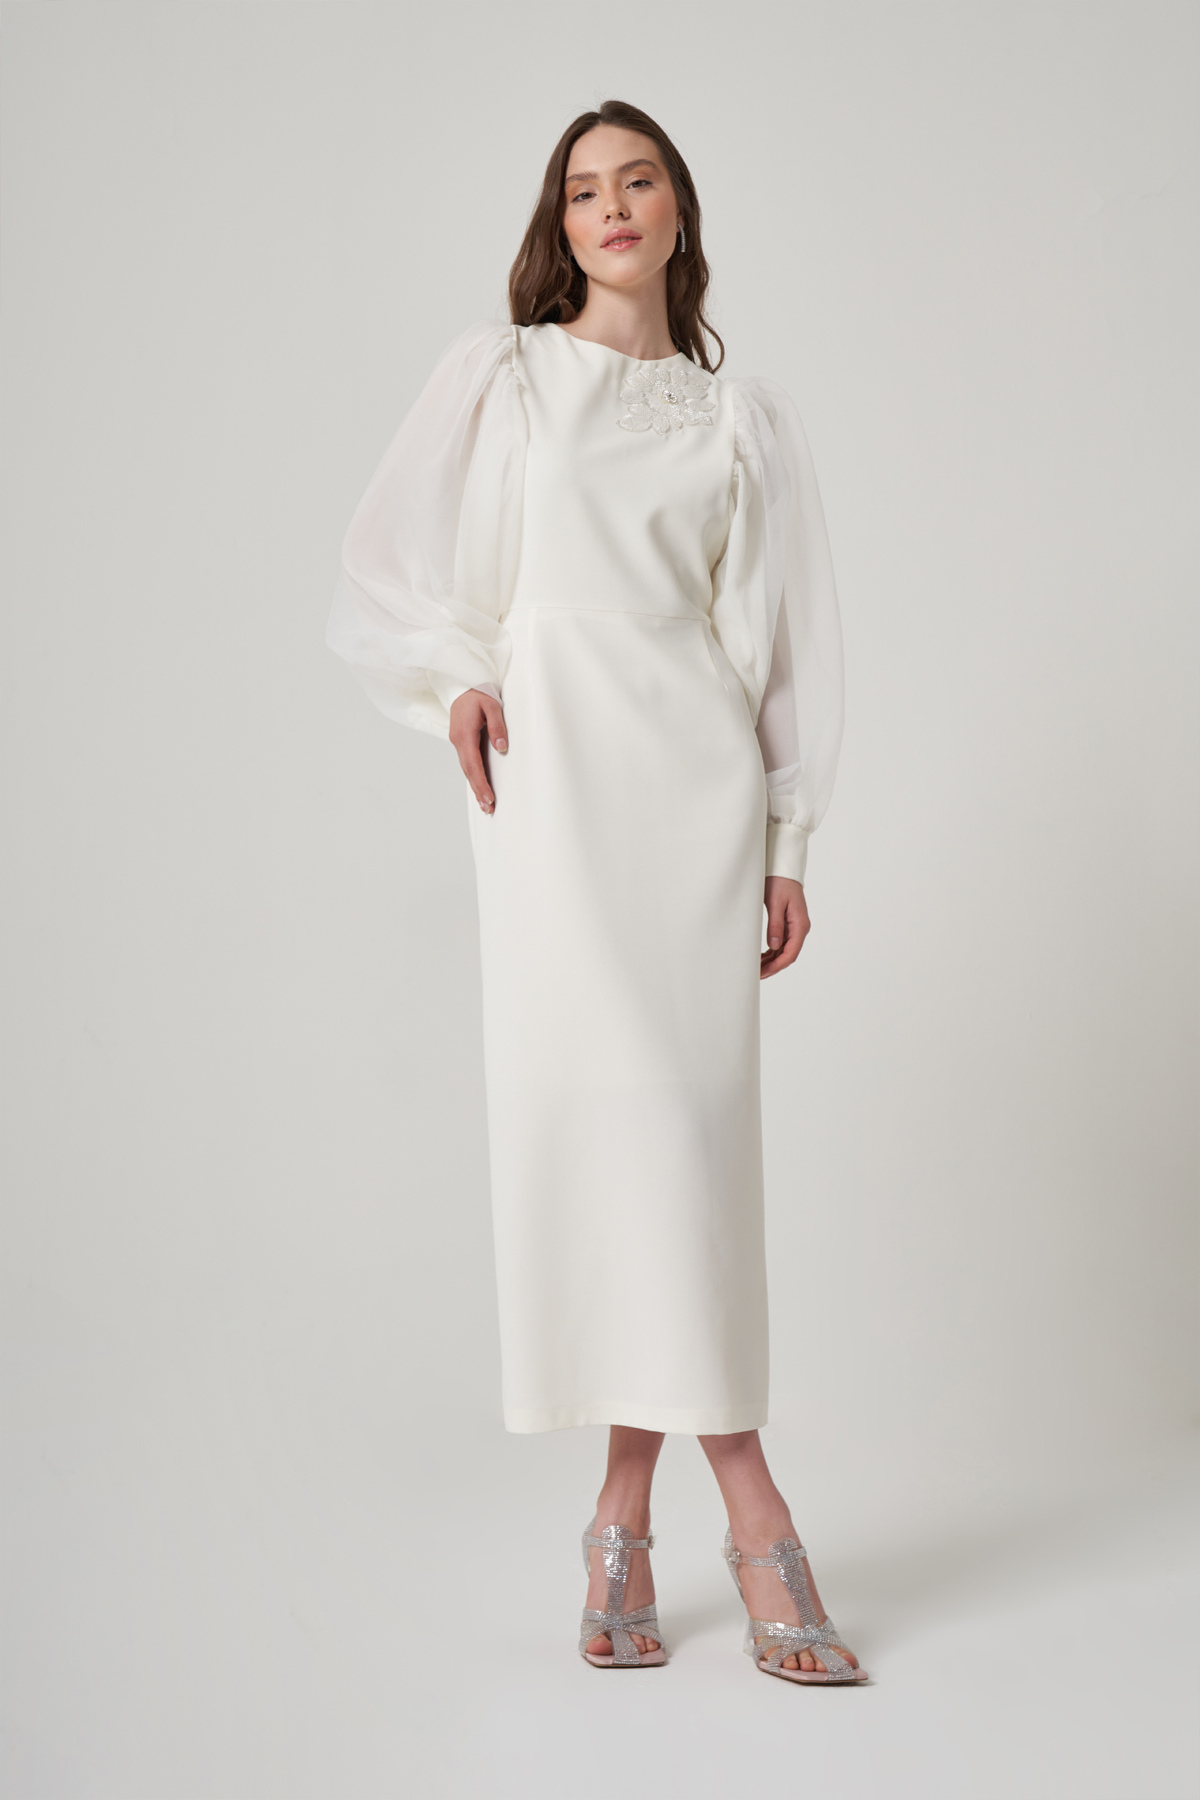 Beyaz İşlemeli Krep Kalem Elbise 2750